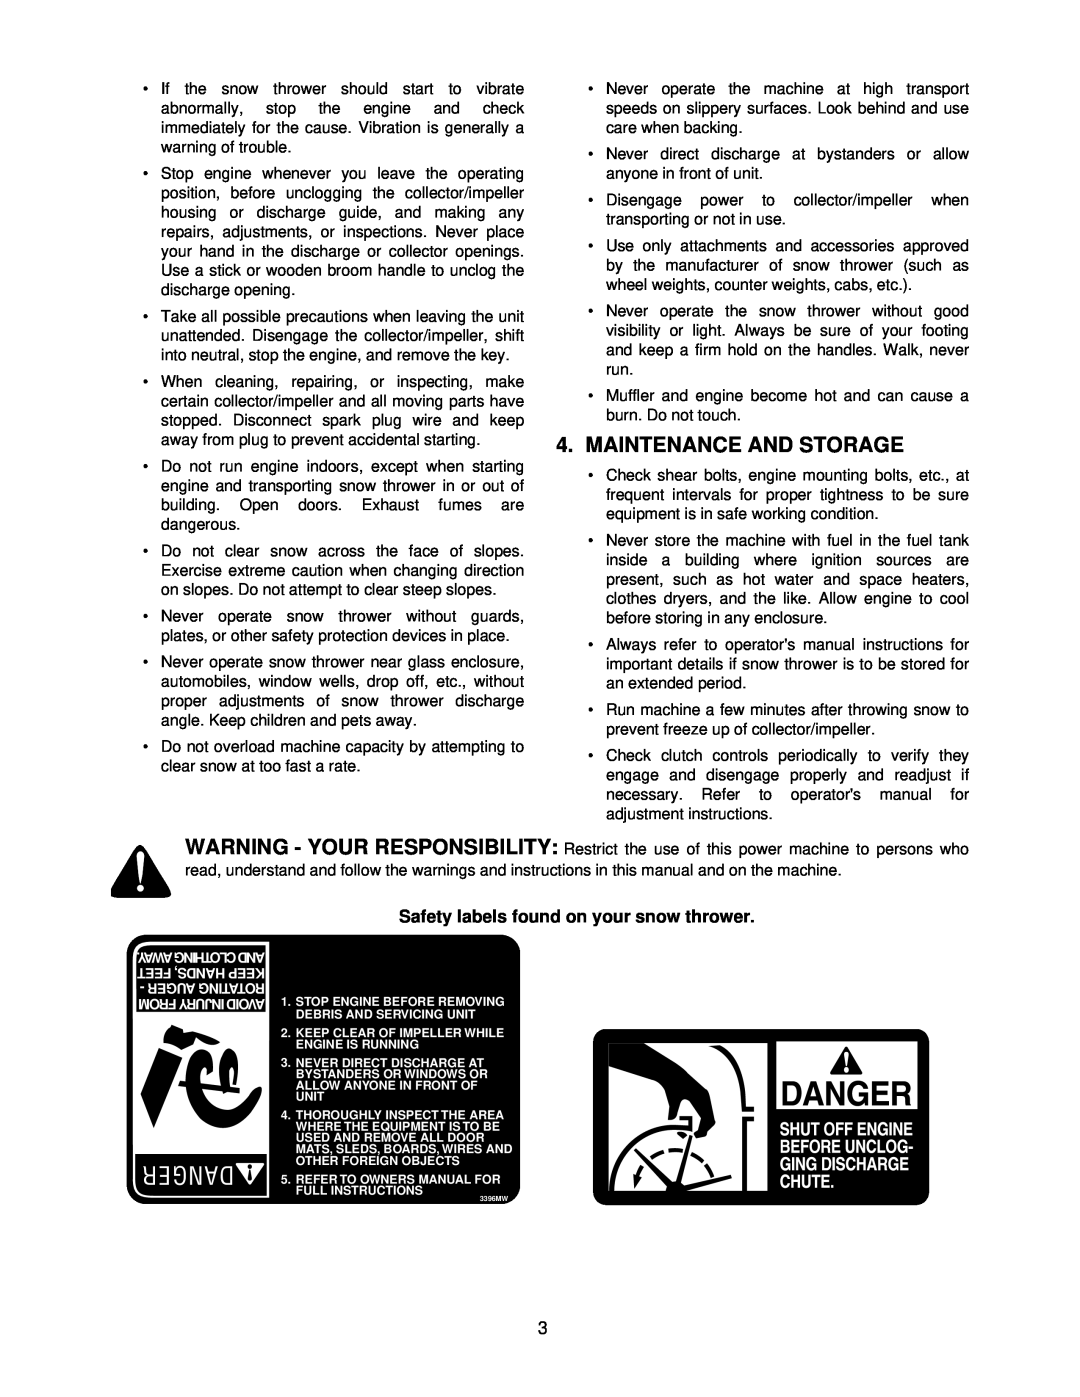 MTD E760, E740 manual Maintenance And Storage, Danger 